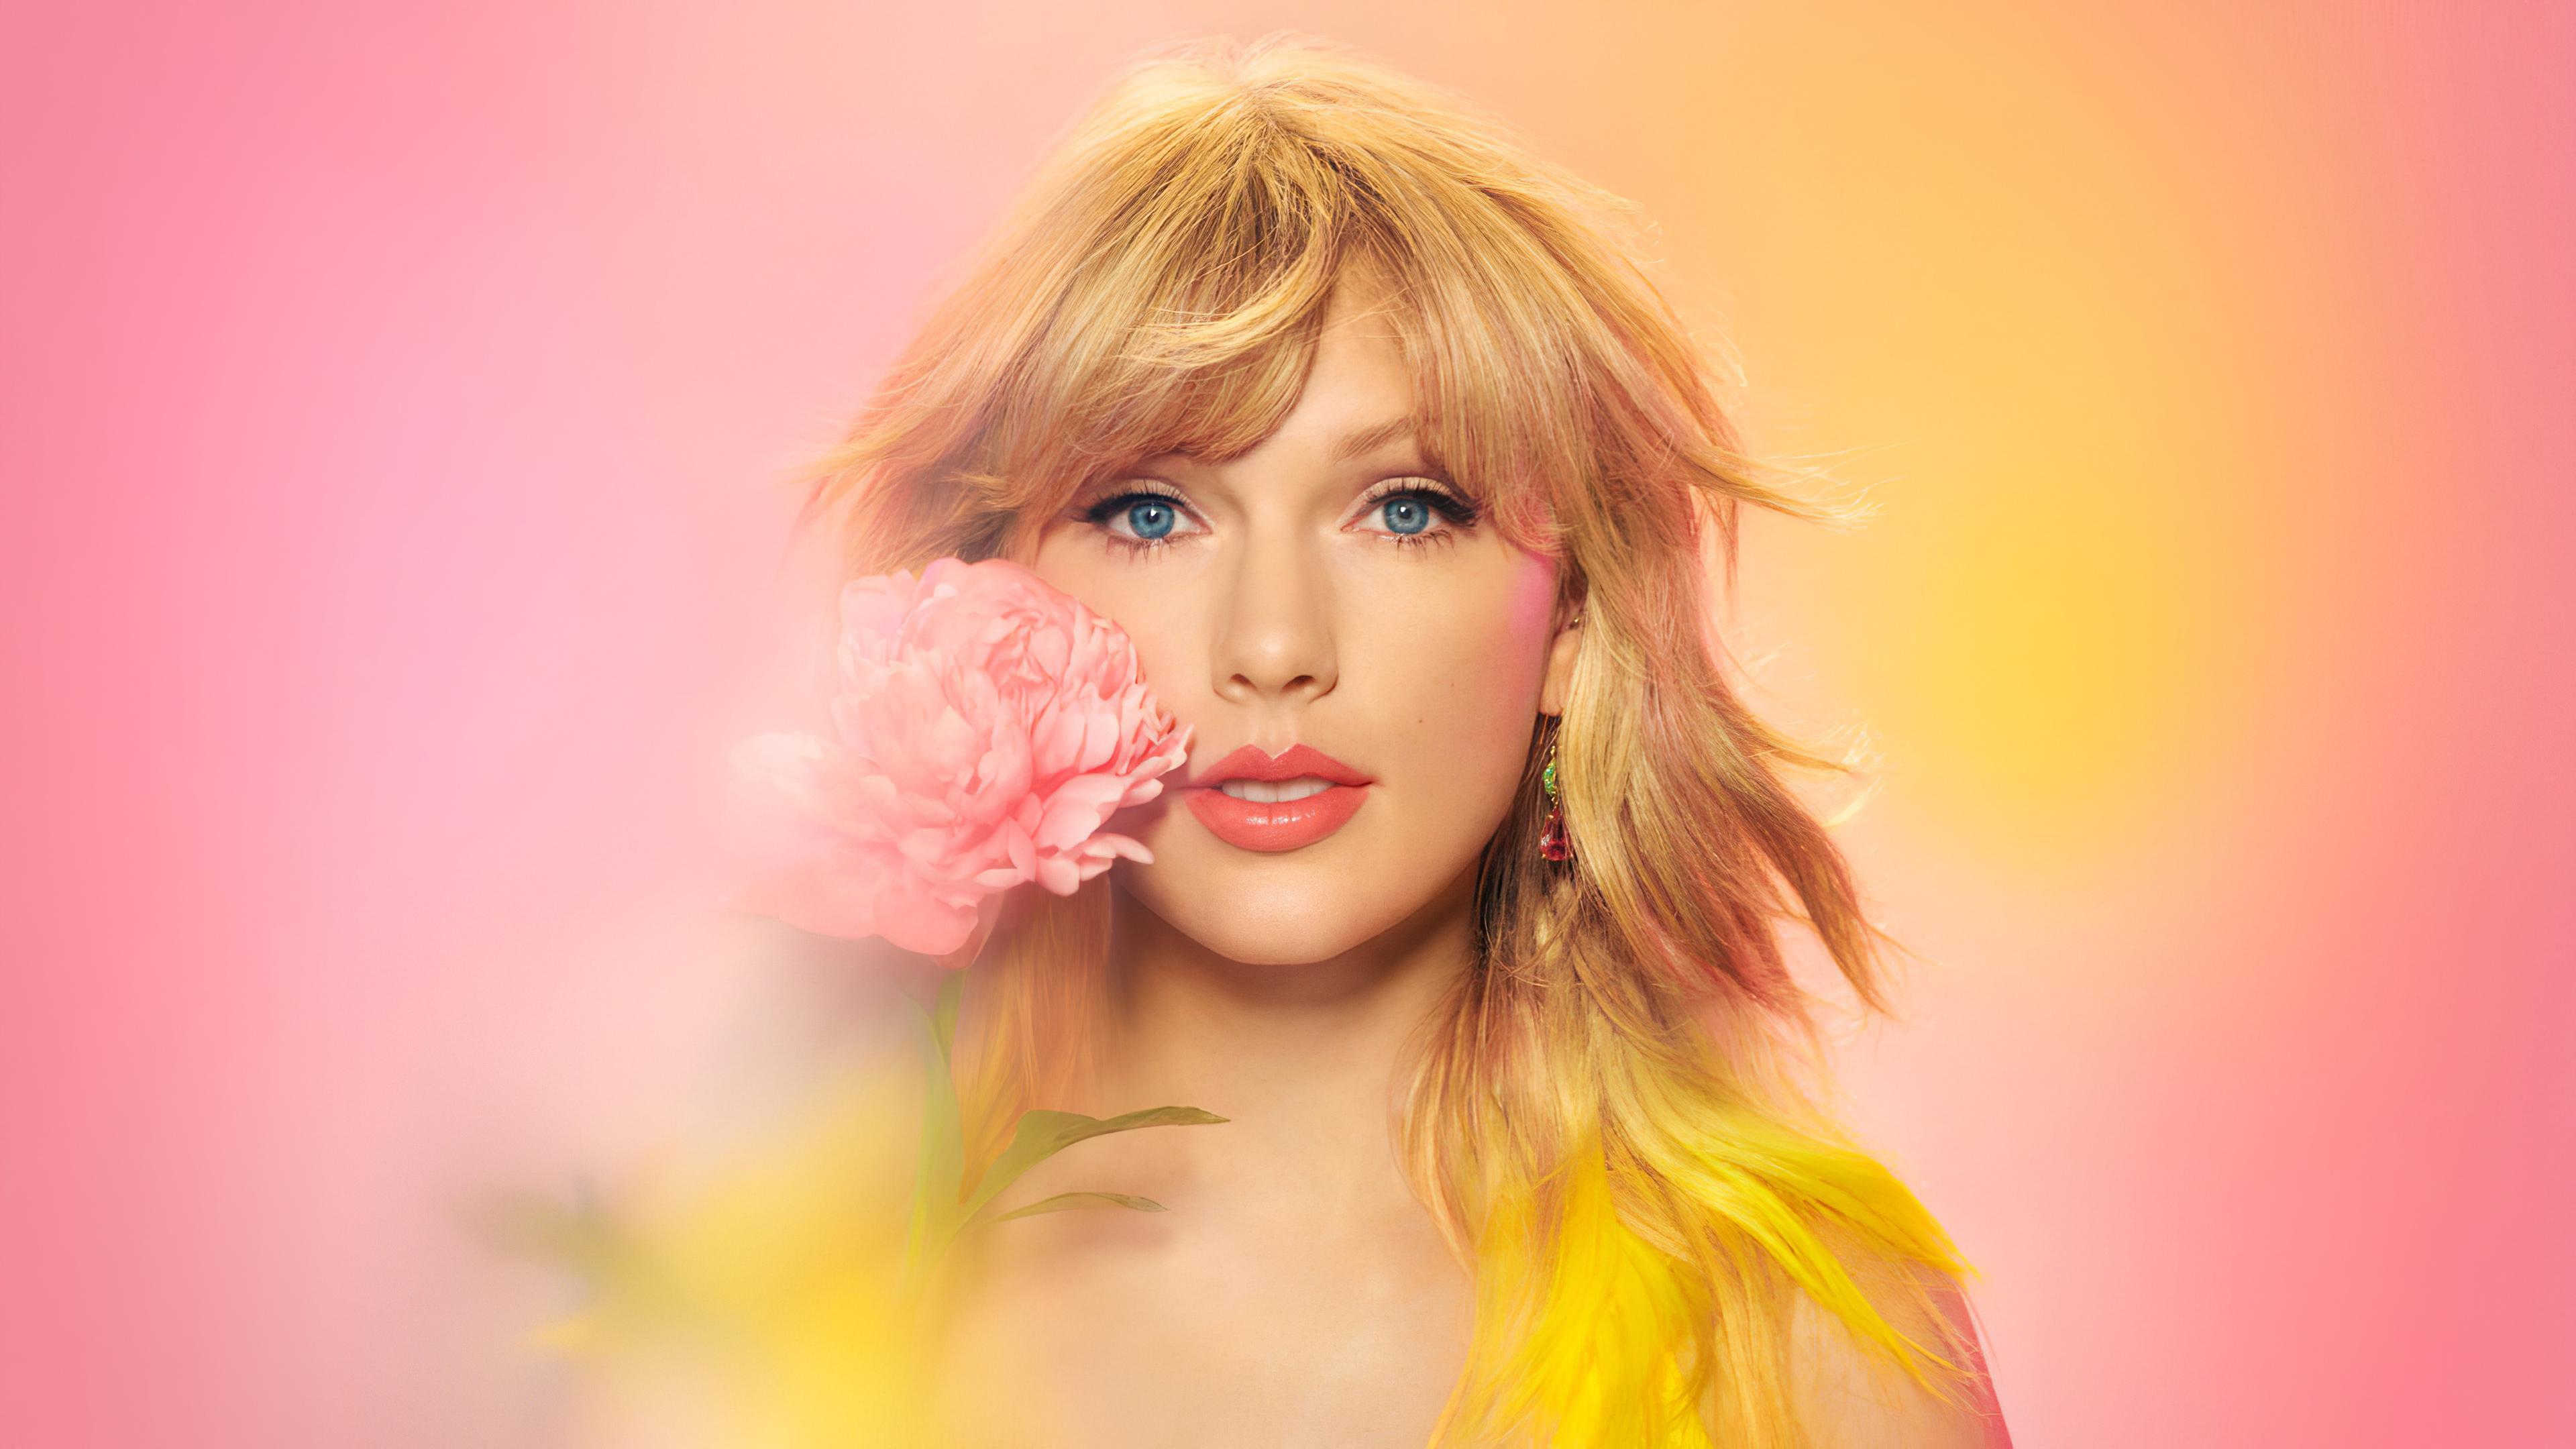 Taylor Swift for Apple Music 2020 4k Ultra HD Wallpaper